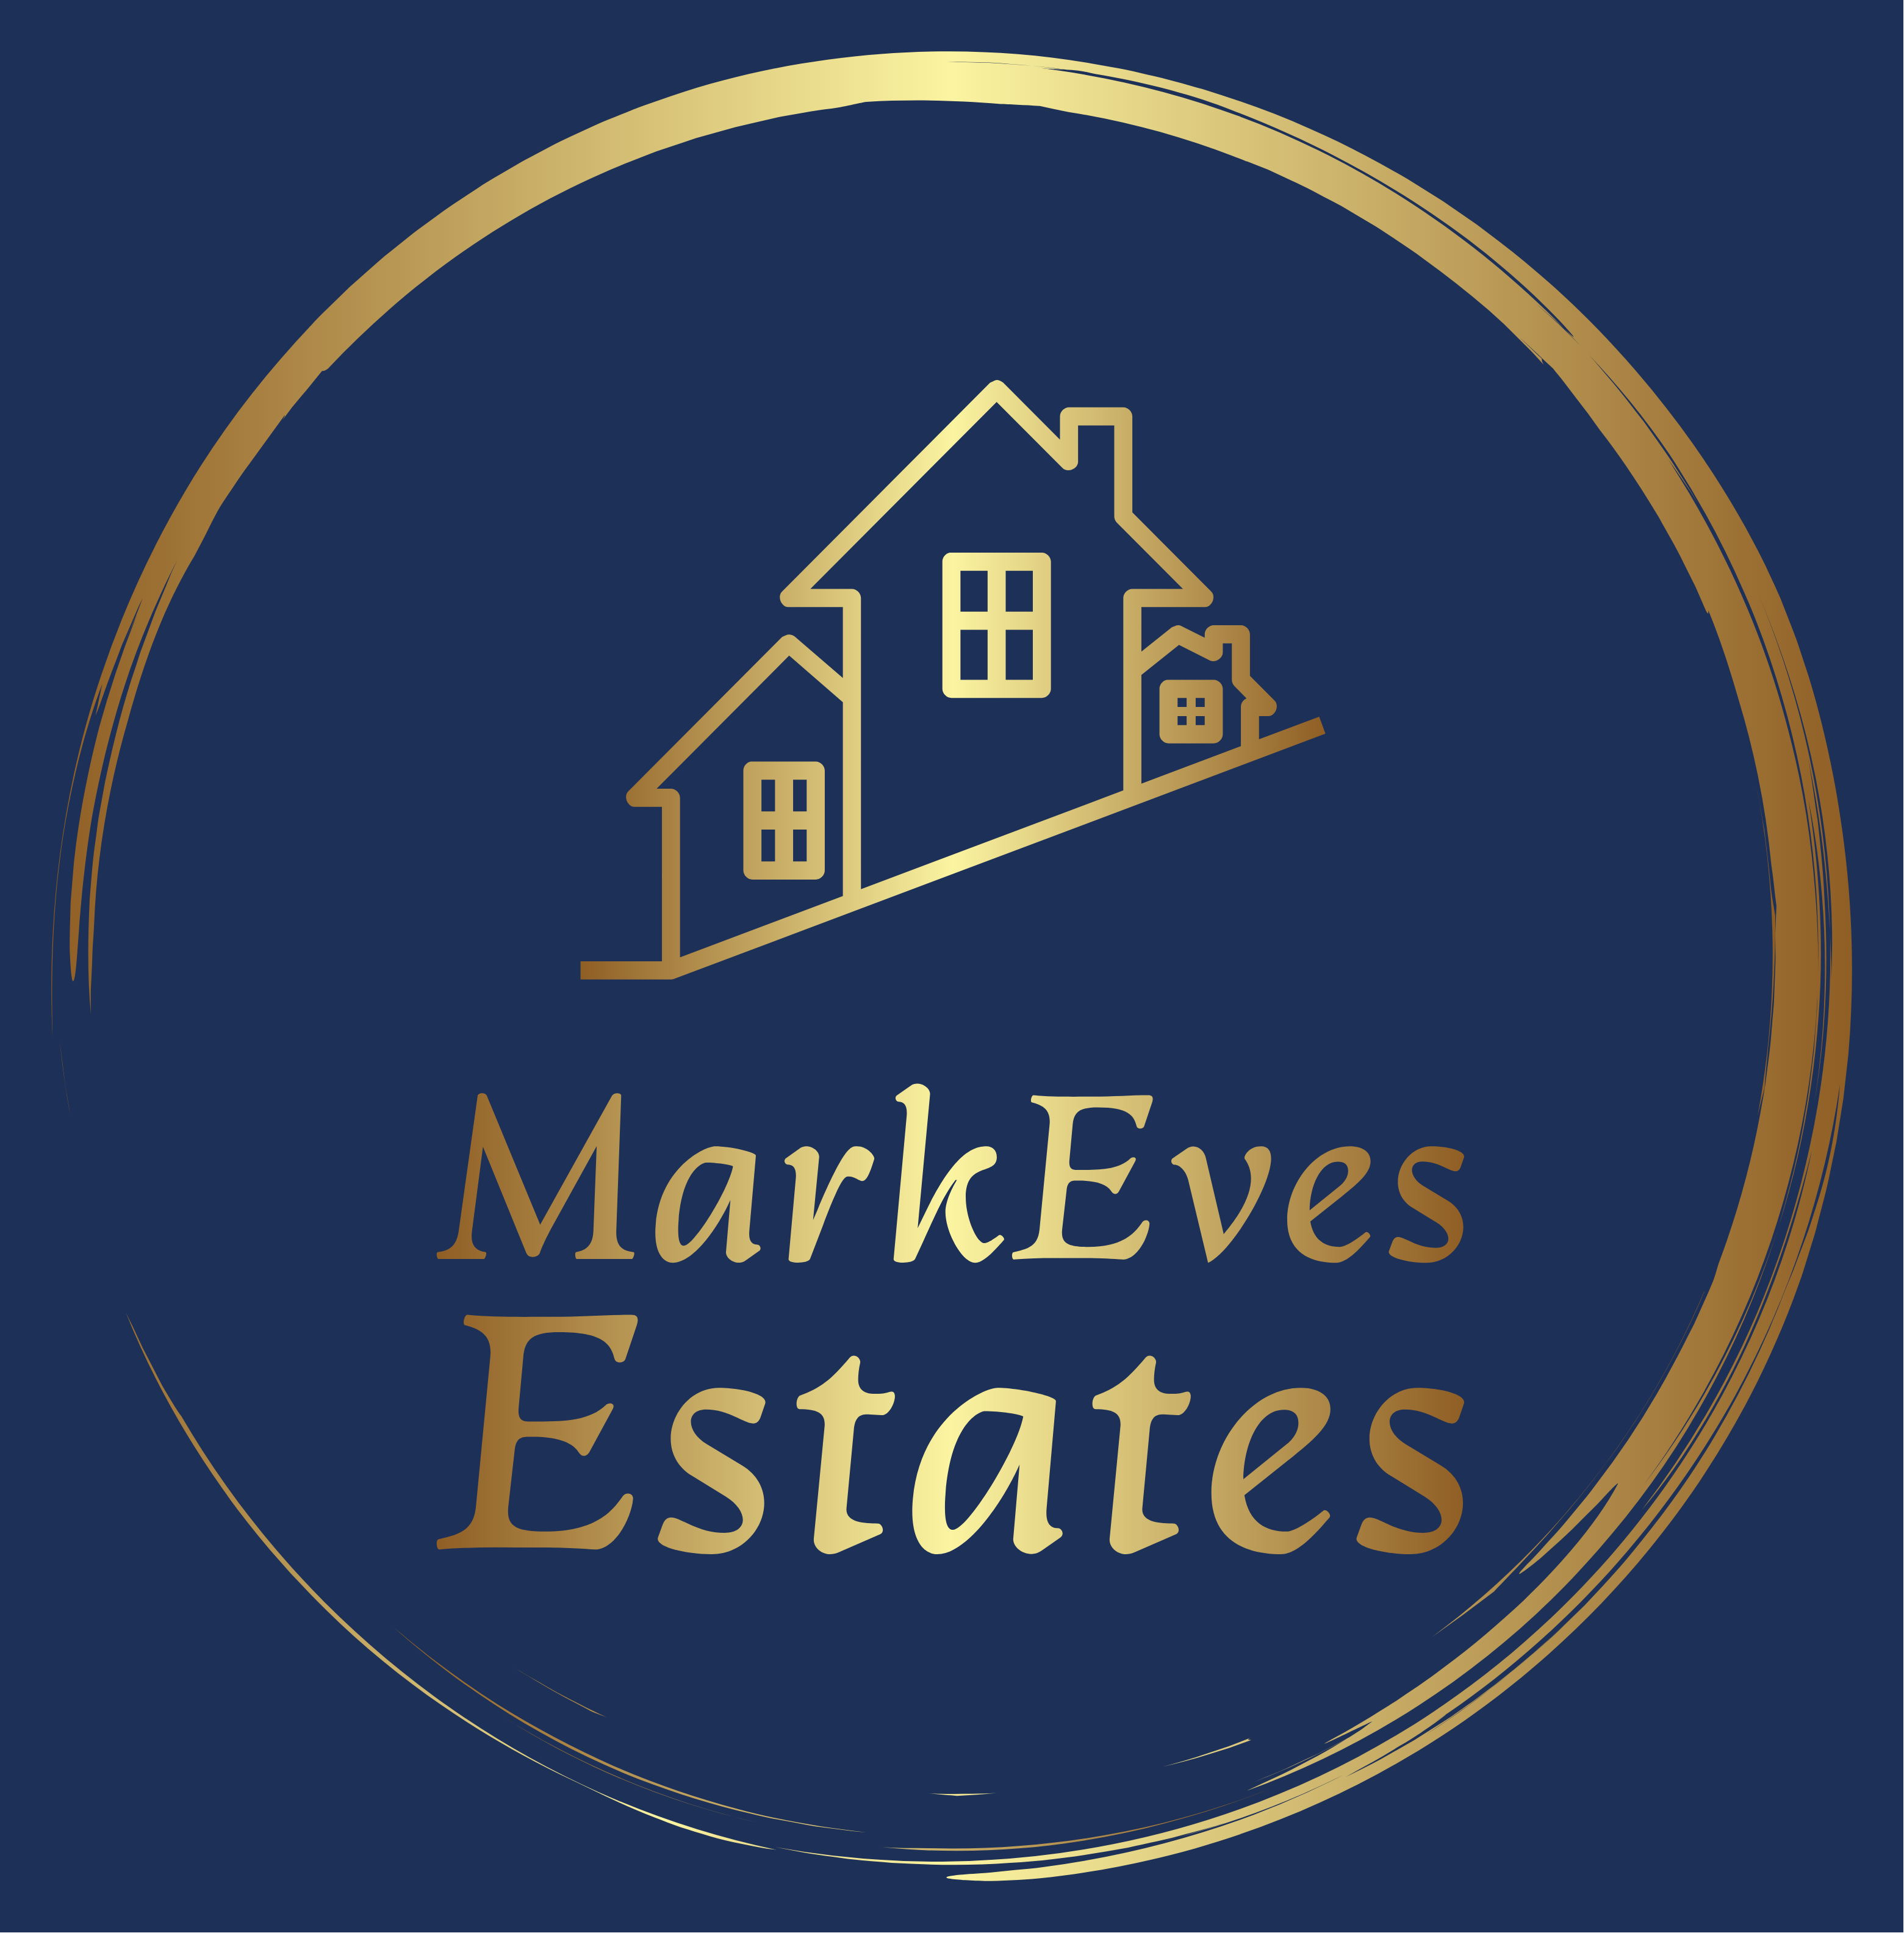 Markeves Estates